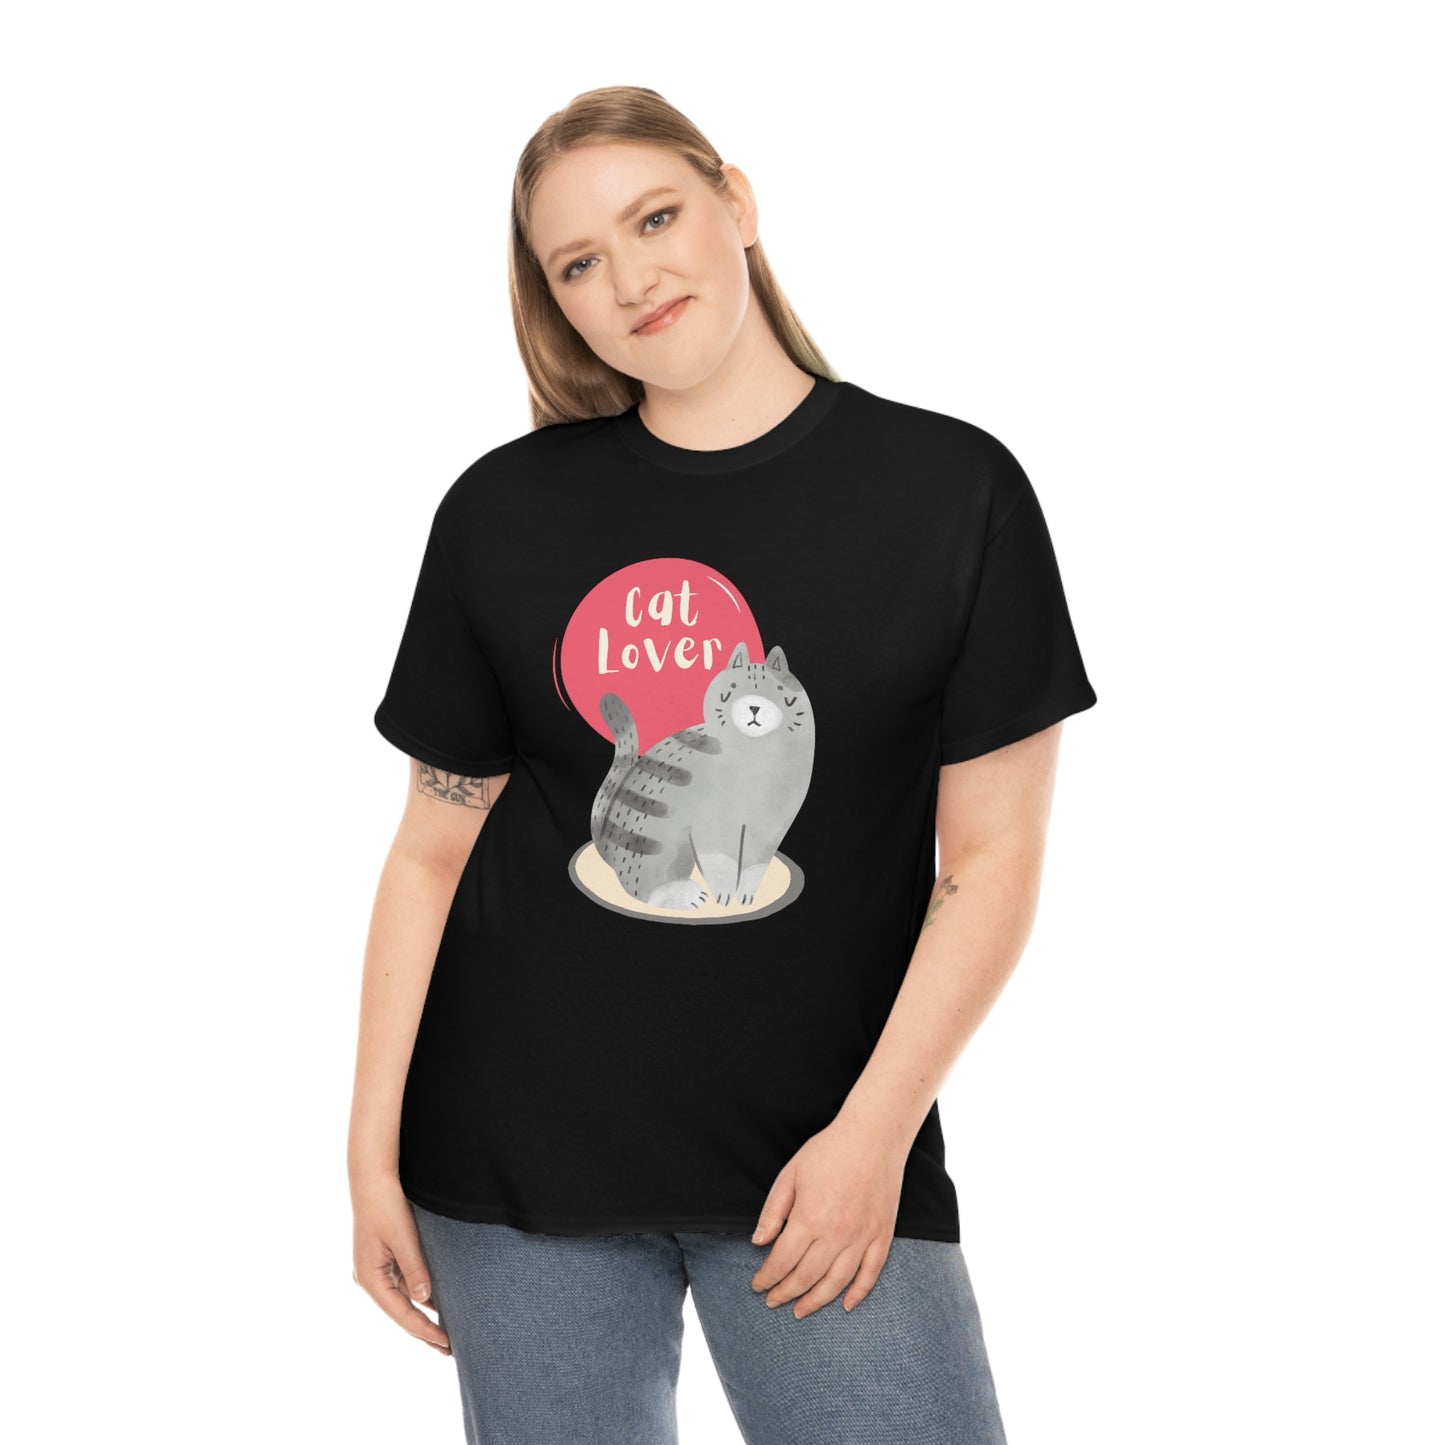 Cute grey Cat " Cat Lover"   Graphic tee shirt